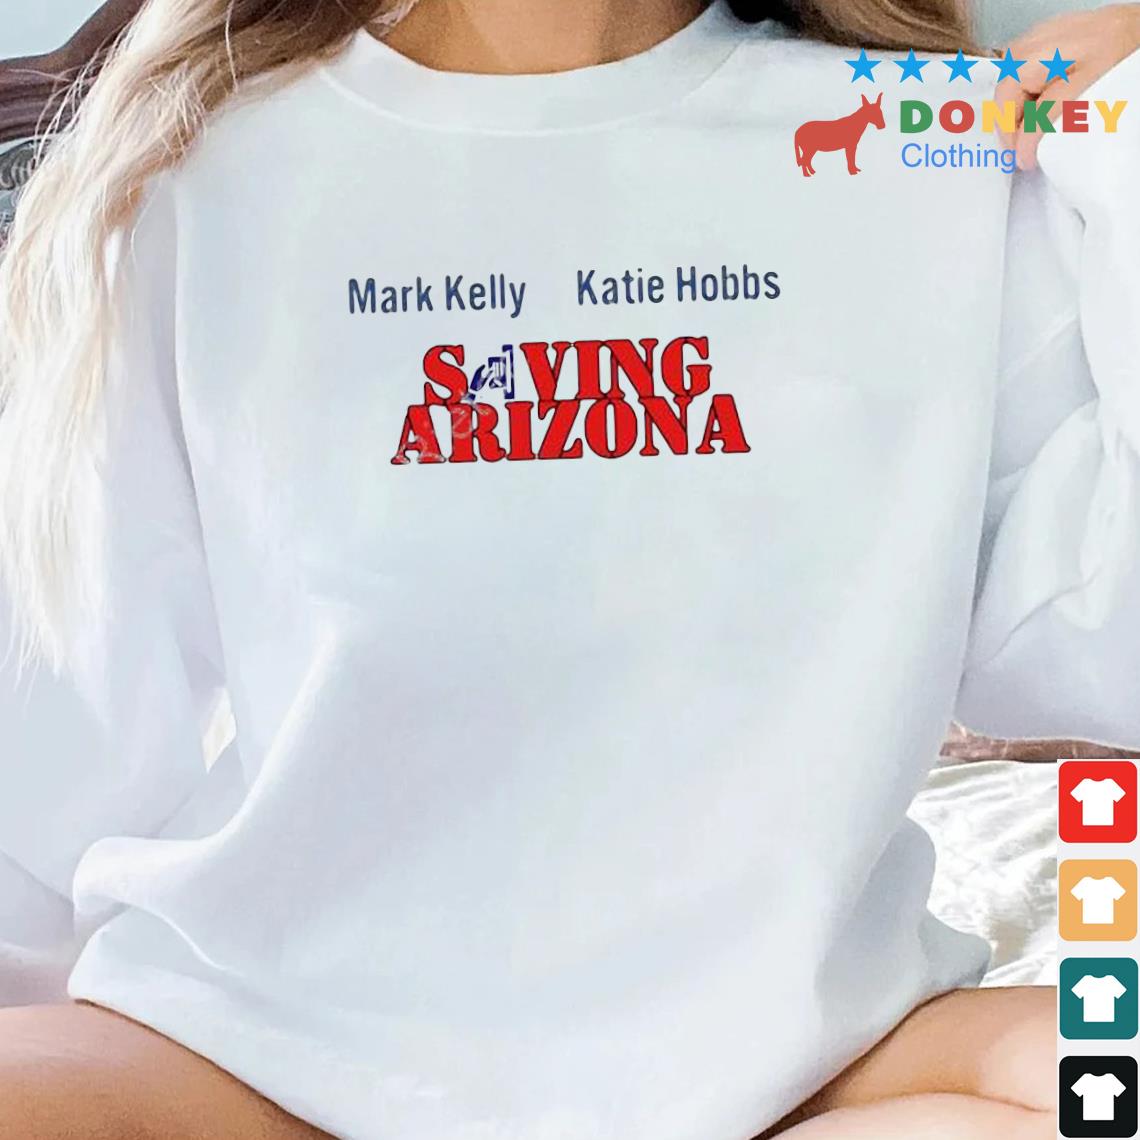 Mark Kelly Katie Hobbs Saving Arizona Shirt